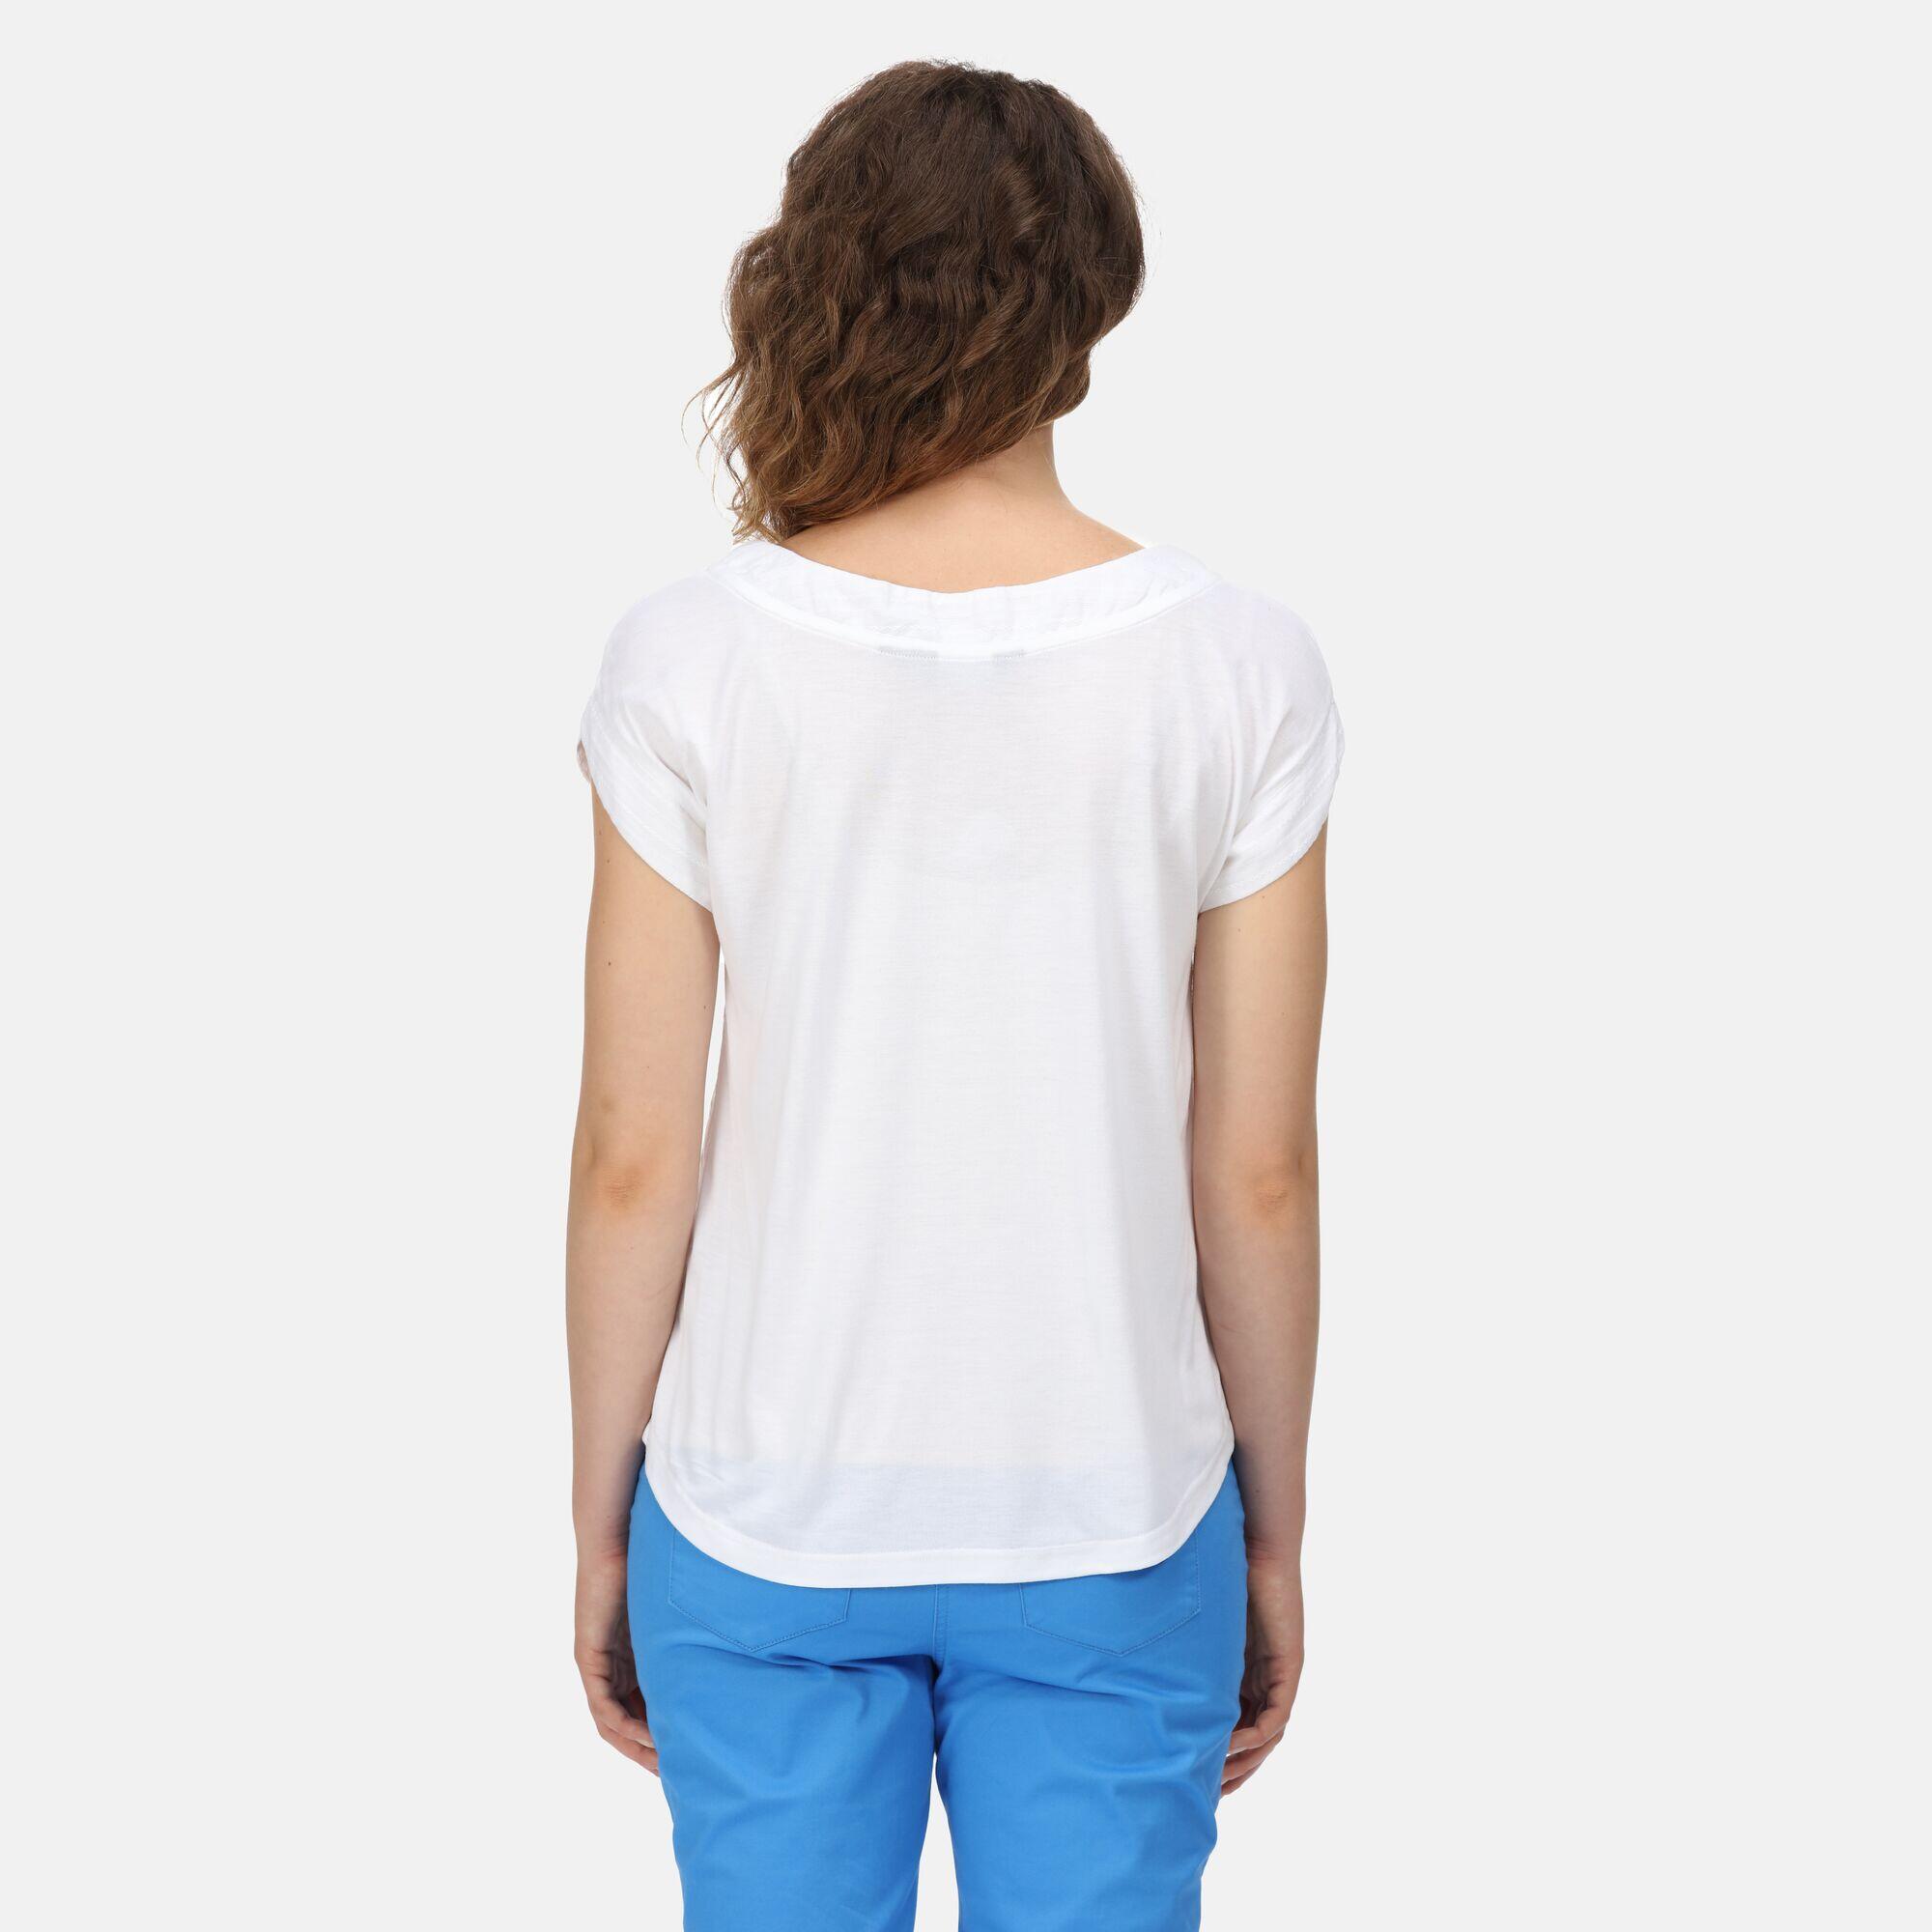 Adine Women's Walking Short Sleeve T-Shirt - White 2/5